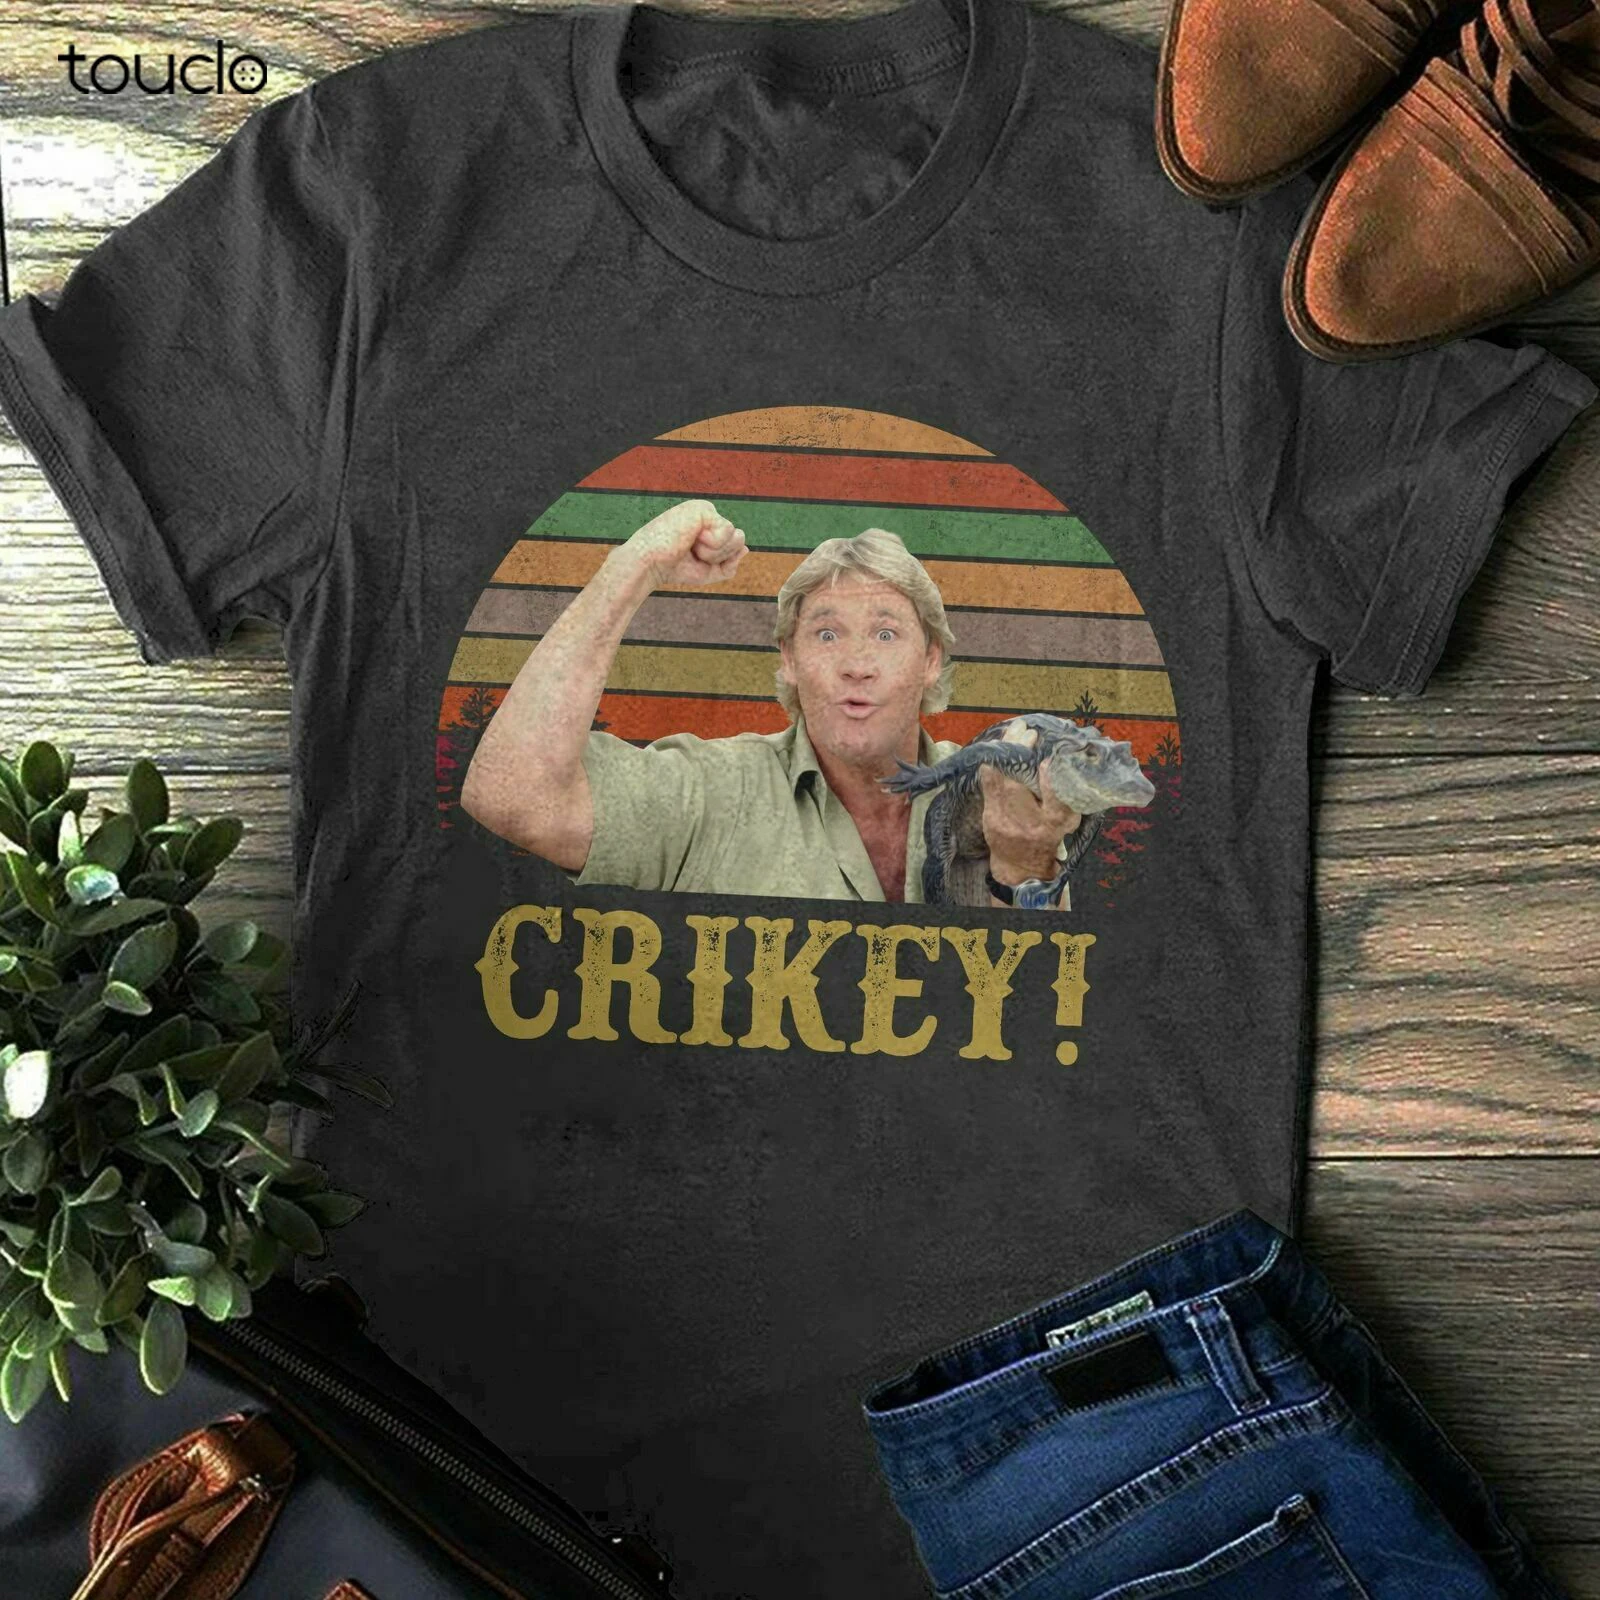 Футболка унисекс Crickey, Стив Ирвин, футболка с изображением охотника на крокодилов, футболка с классическими фильмами